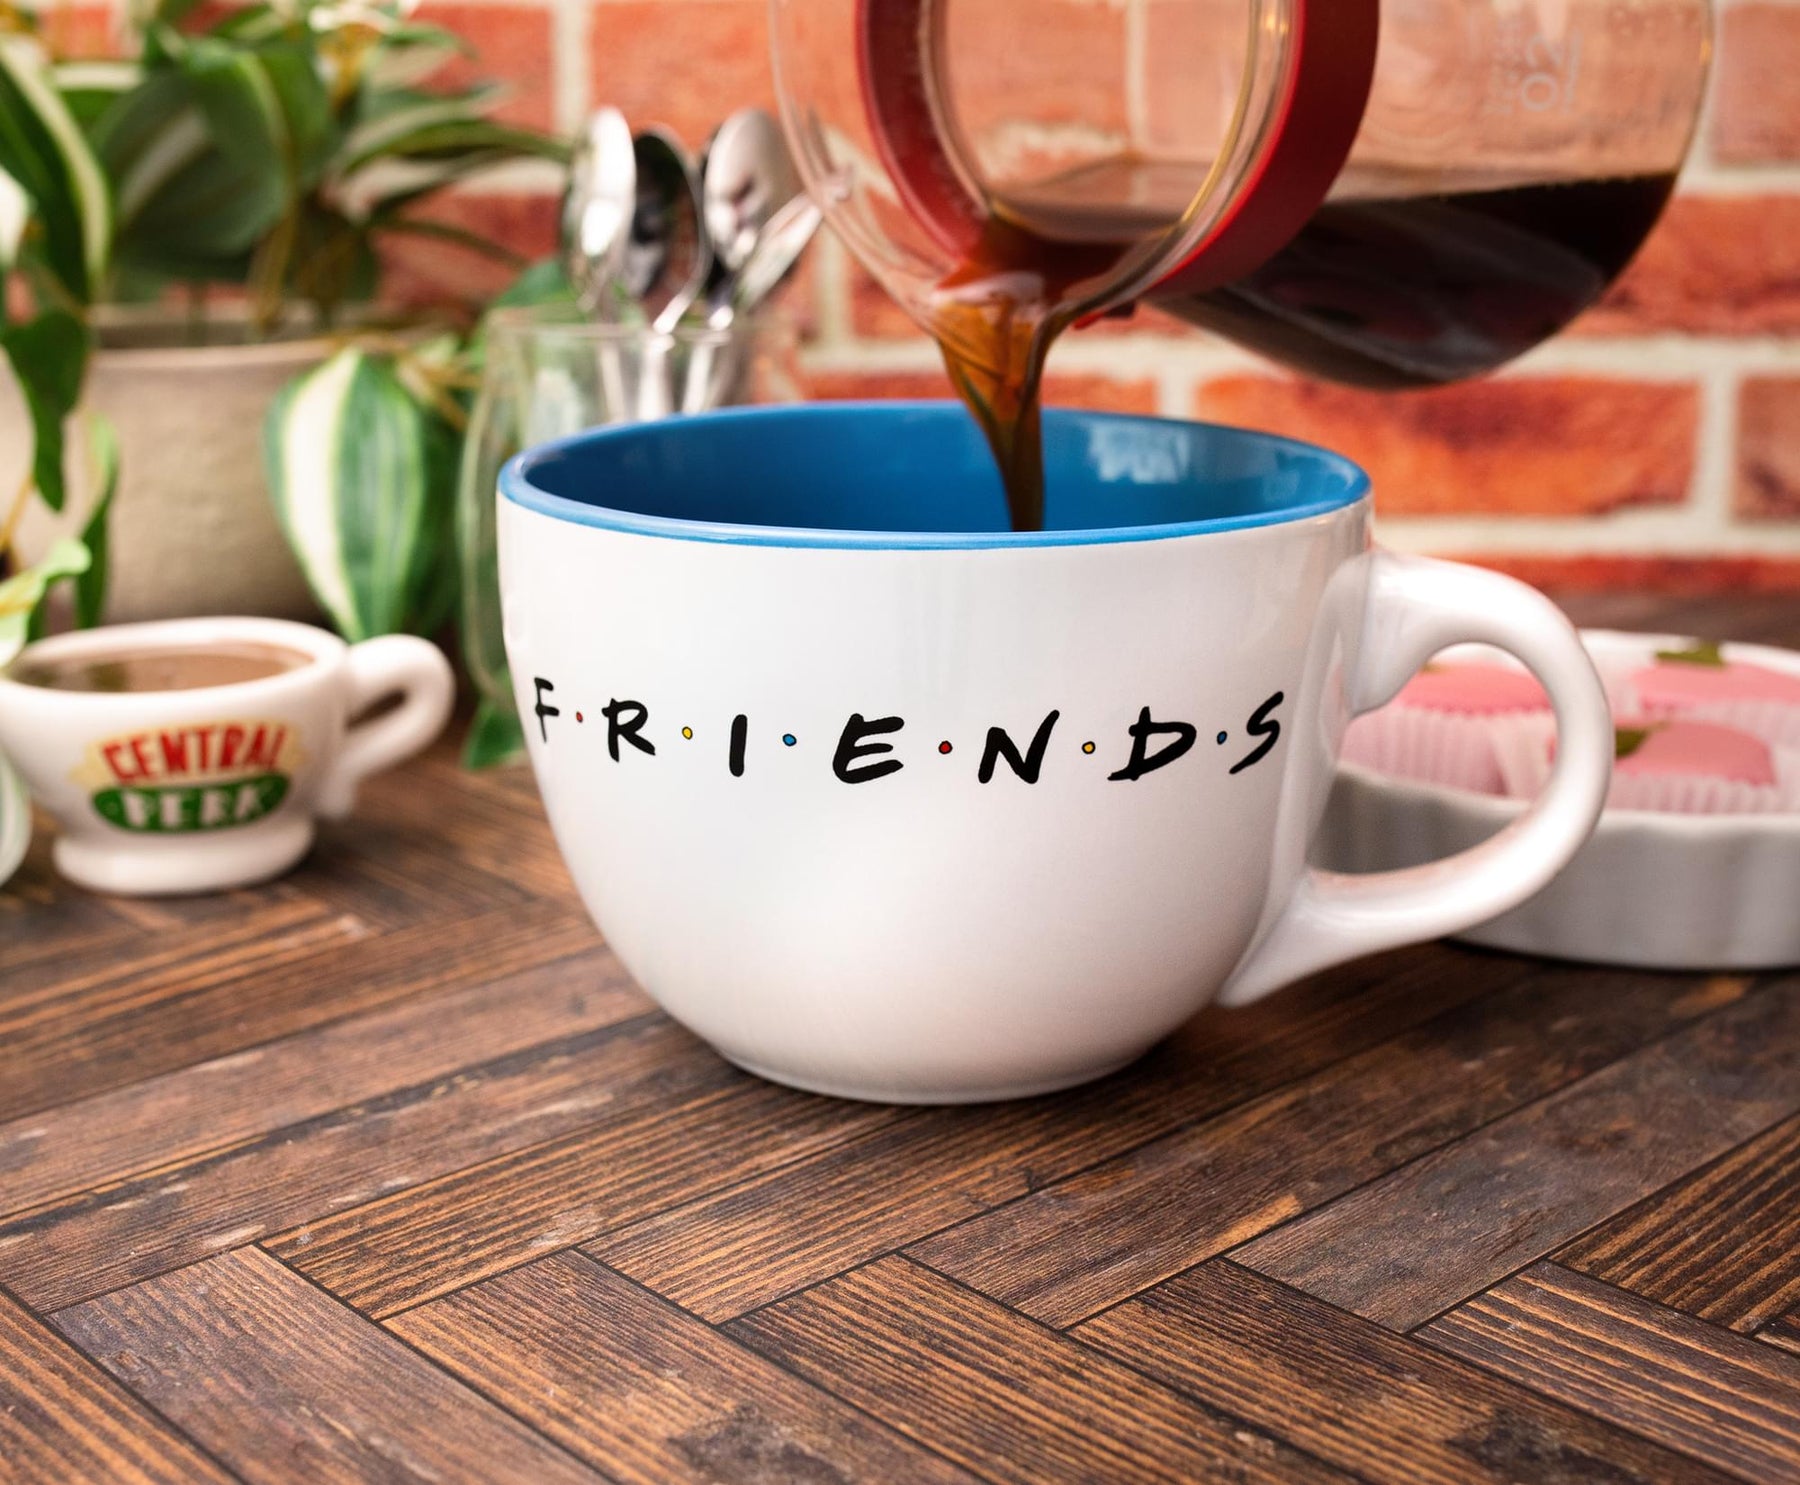 FRIENDS Gift Set Glass + Mug + 2 Coasters Doodle